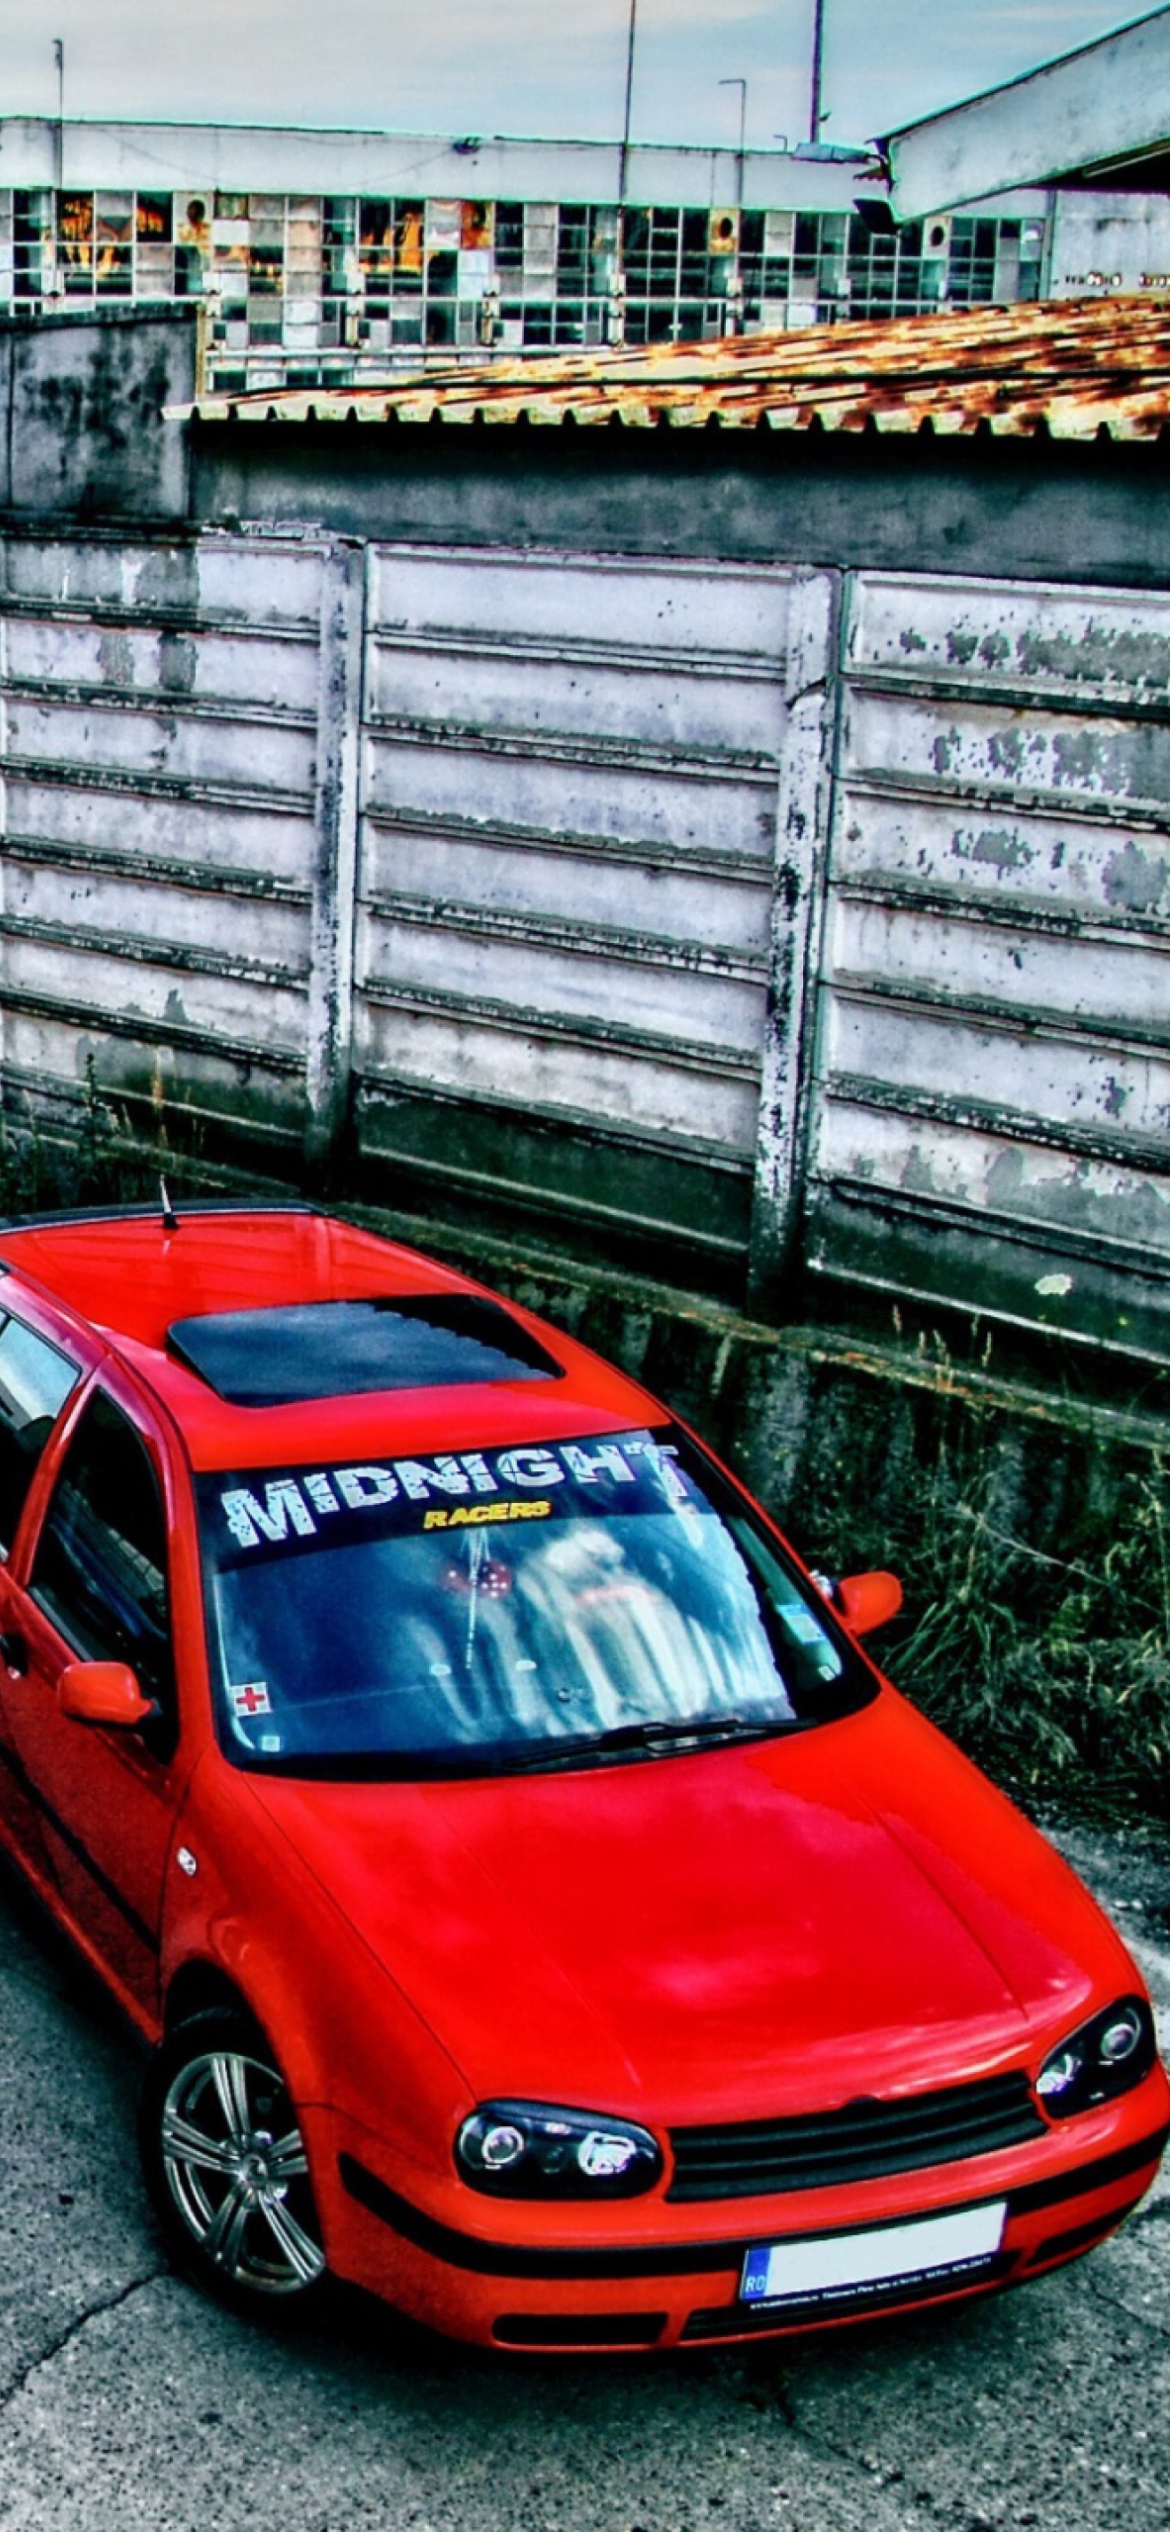 Das Peugeot 307 Midnight Racers Wallpaper 1170x2532